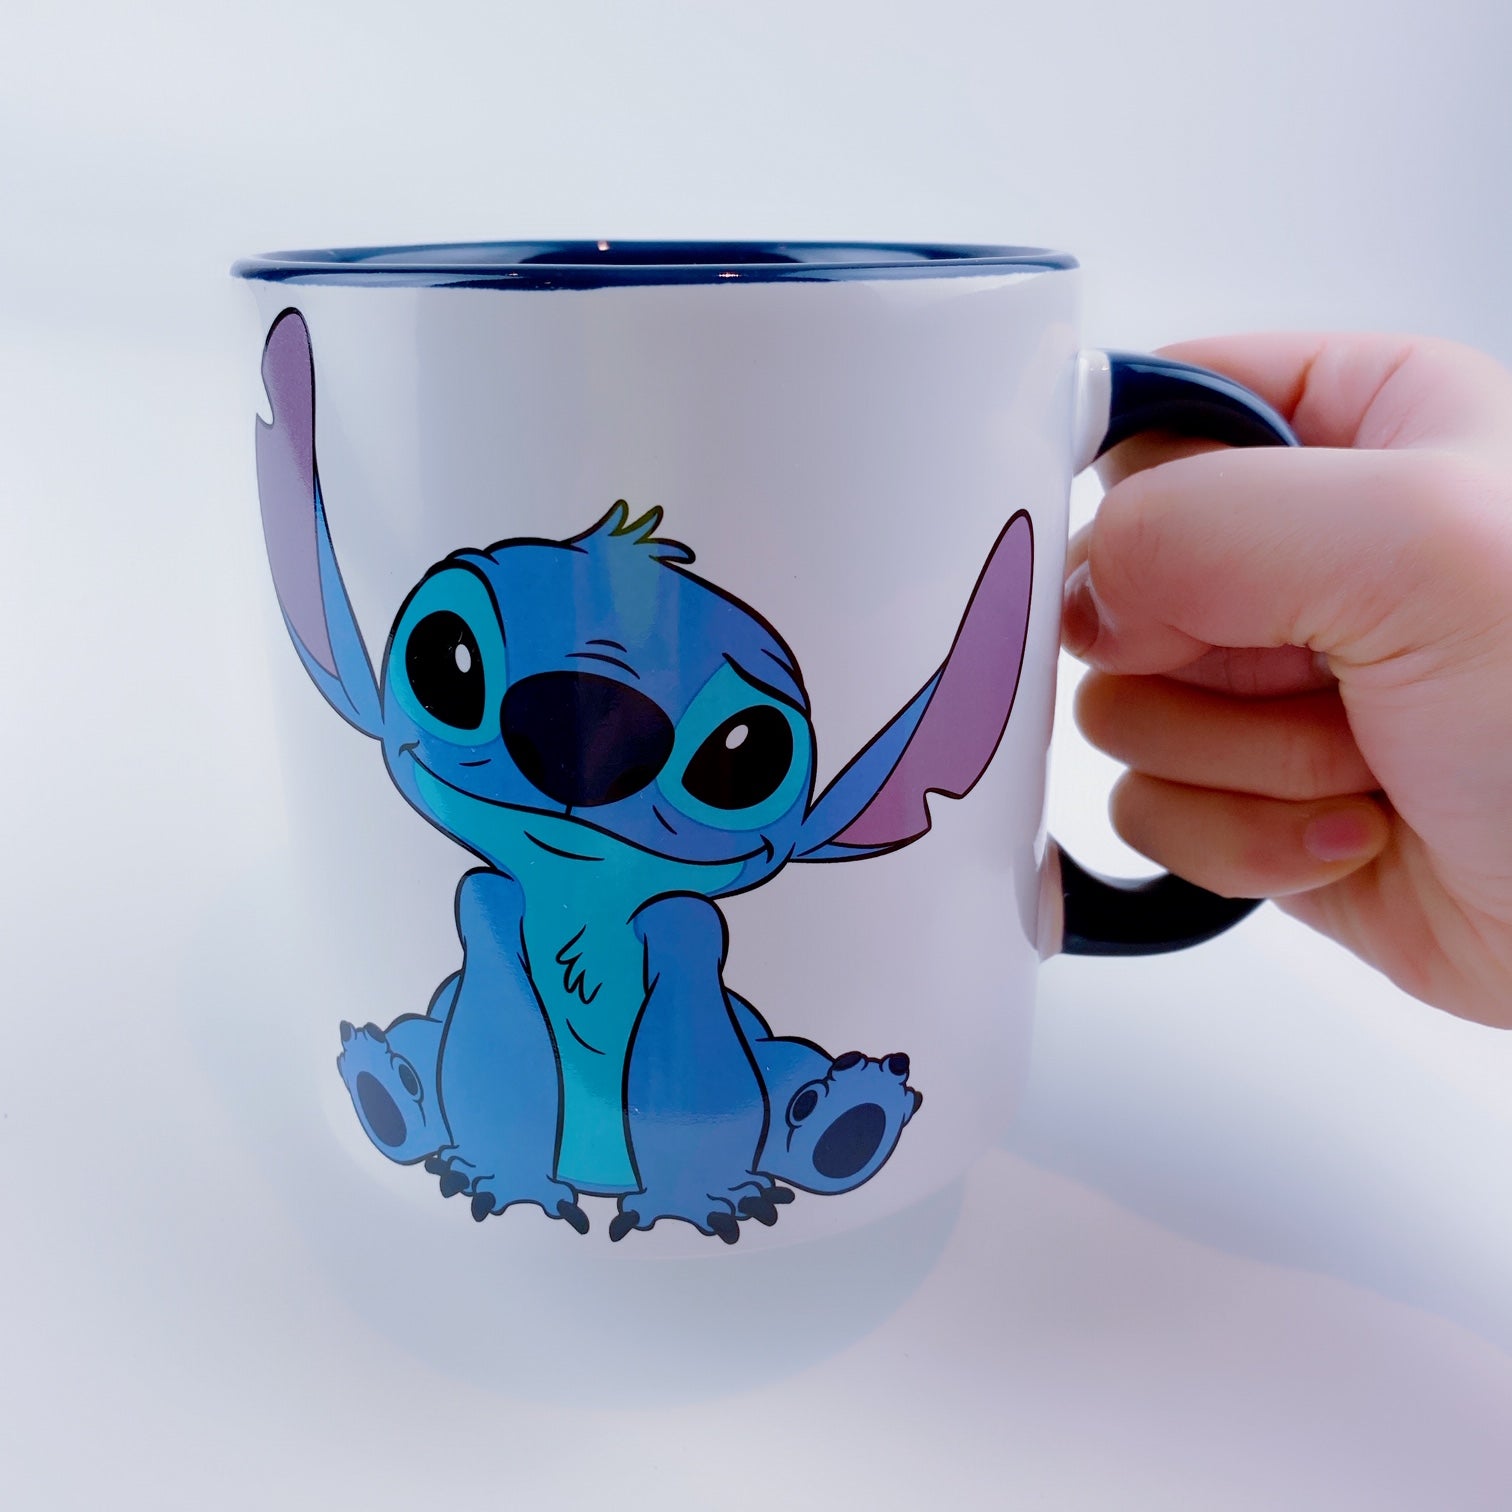 Tasse Stitch Portrait Disneyland Paris 2017 mug Disney Lilo et Stitch bleu